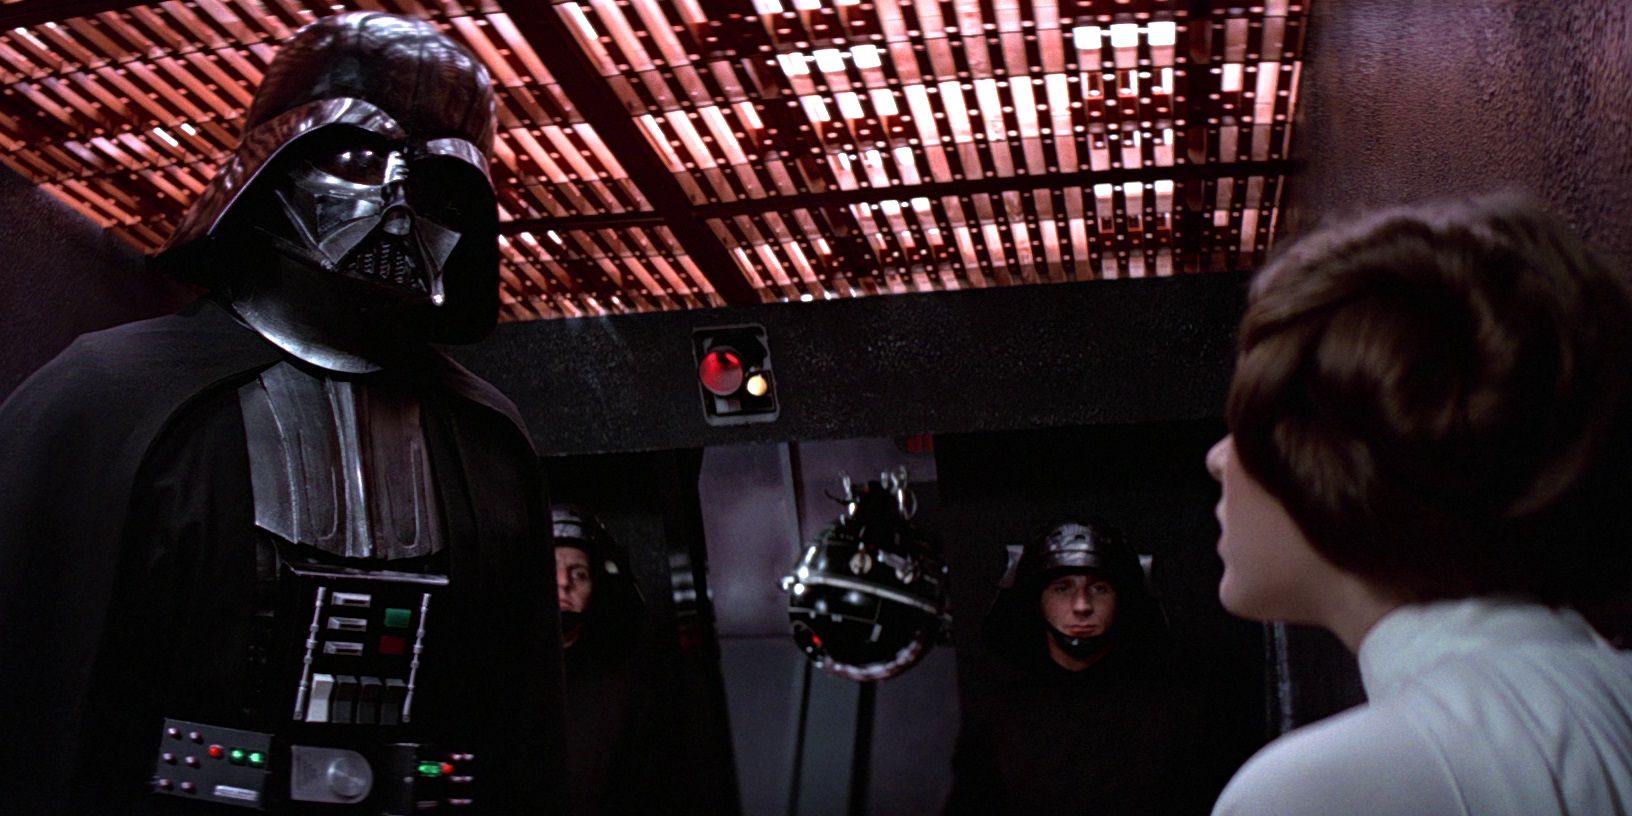 25 Things That Make No Sense About The Star Wars Franchise